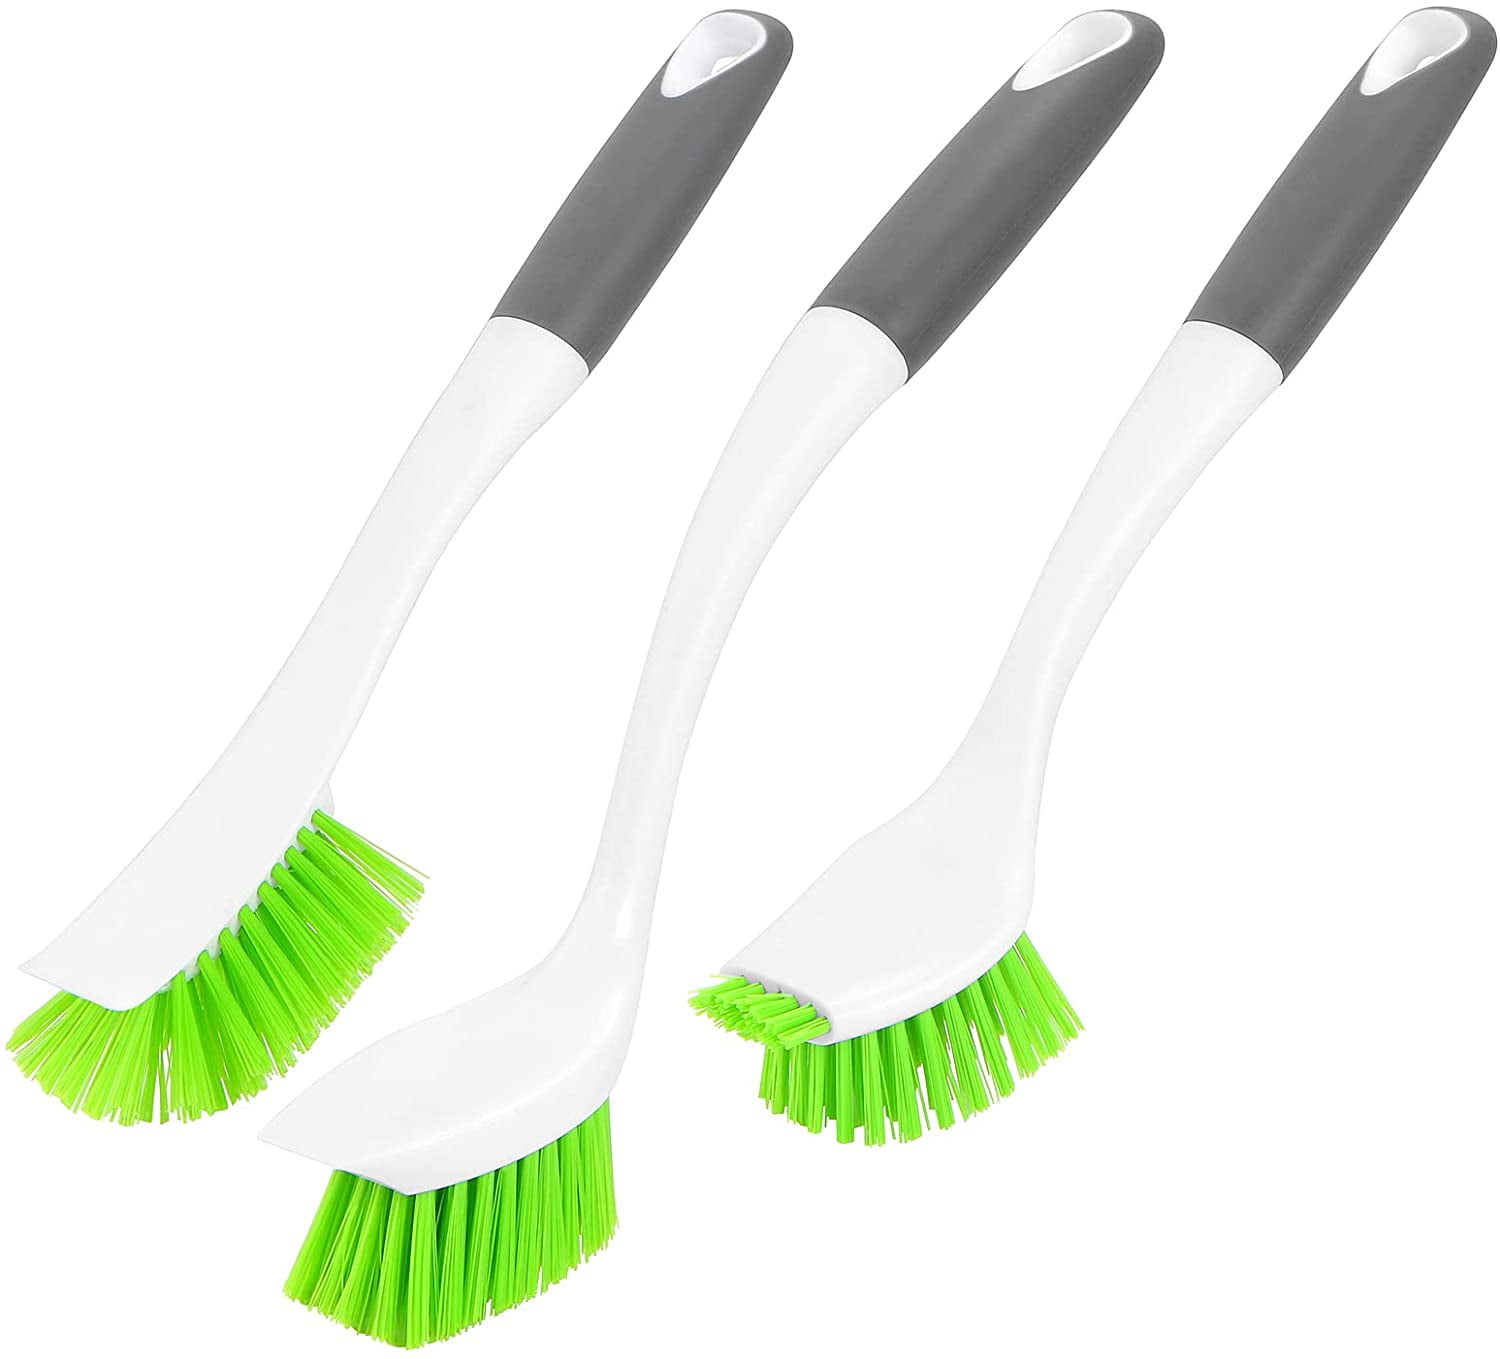 ITTAHO 3 Pack Dish Brush Set, Rubber Kitchen Scrub Brush for Cleaning -  Green 